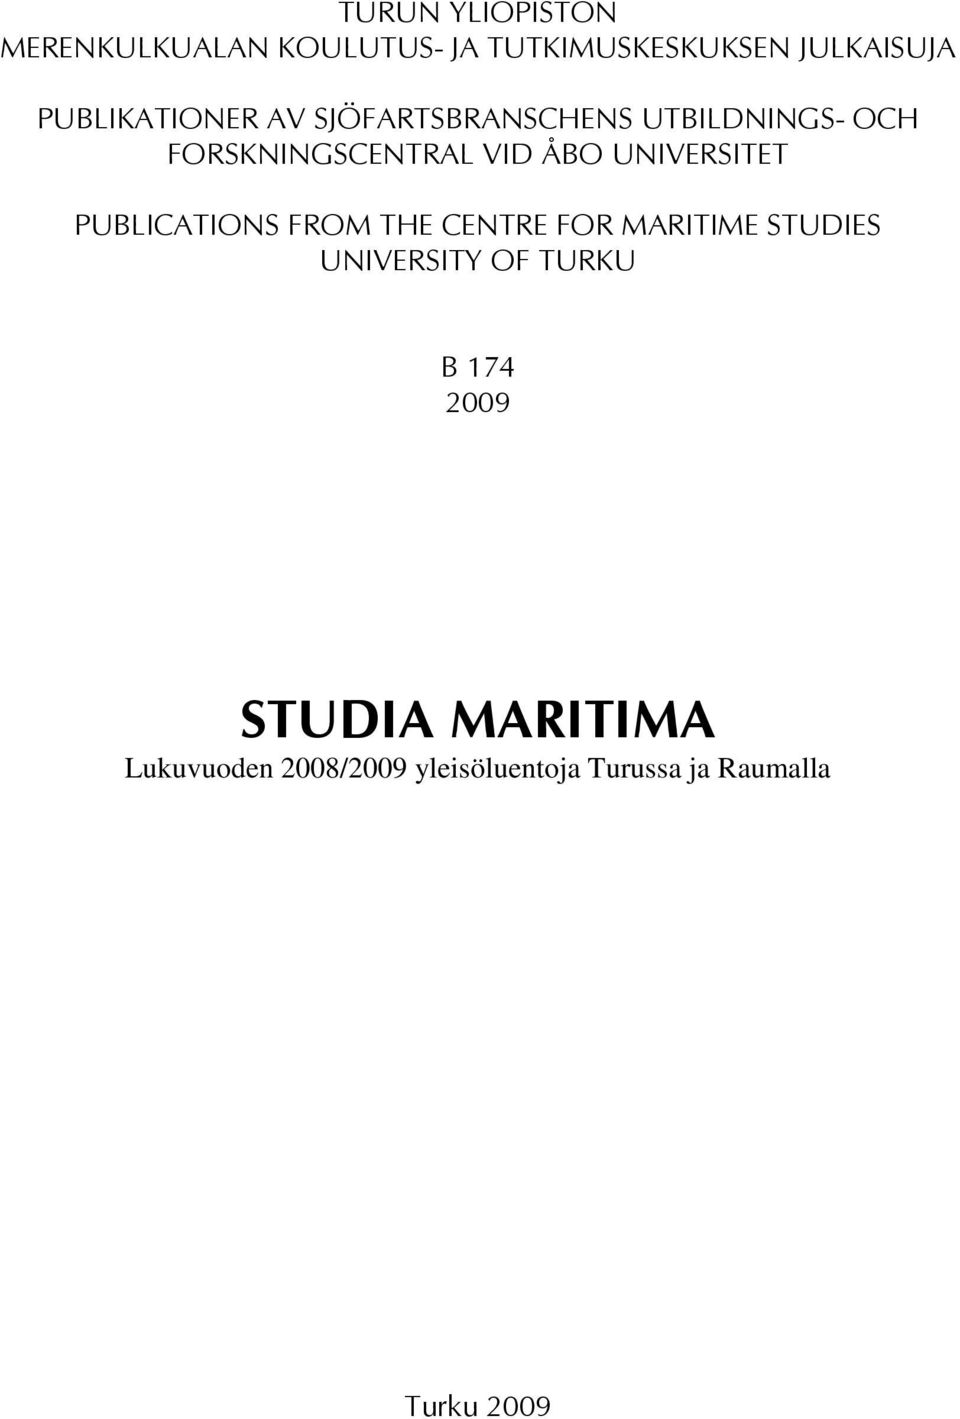 UNIVERSITET PUBLICATIONS FROM THE CENTRE FOR MARITIME STUDIES UNIVERSITY OF TURKU